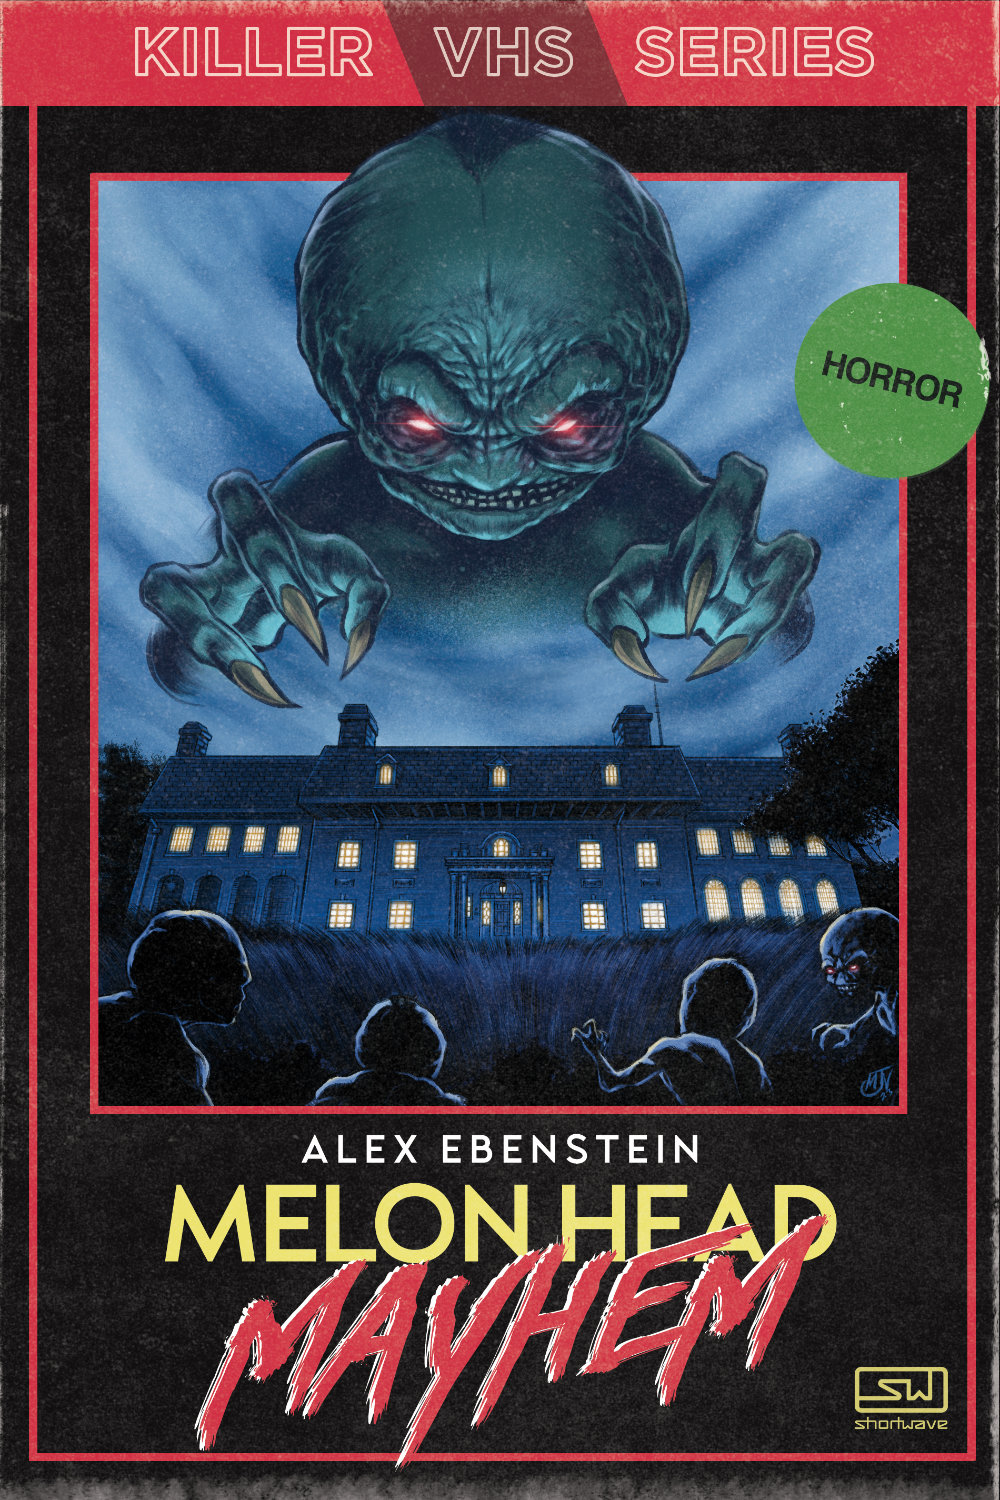 Melon Head Mayhem